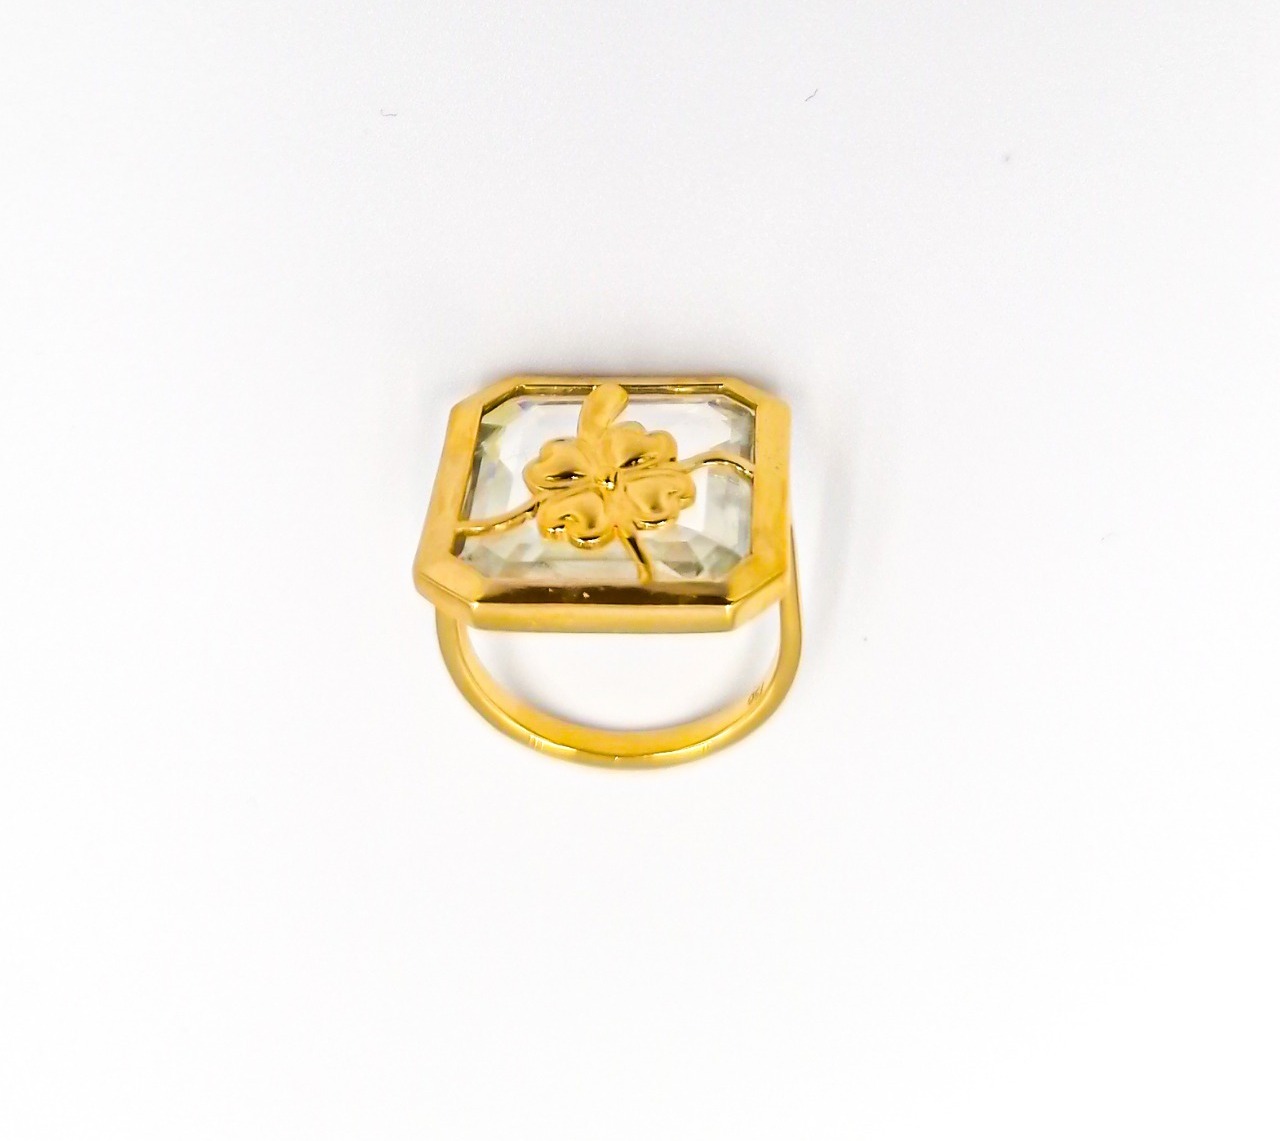 Diamond Topaz Ring in 18k yellow gold